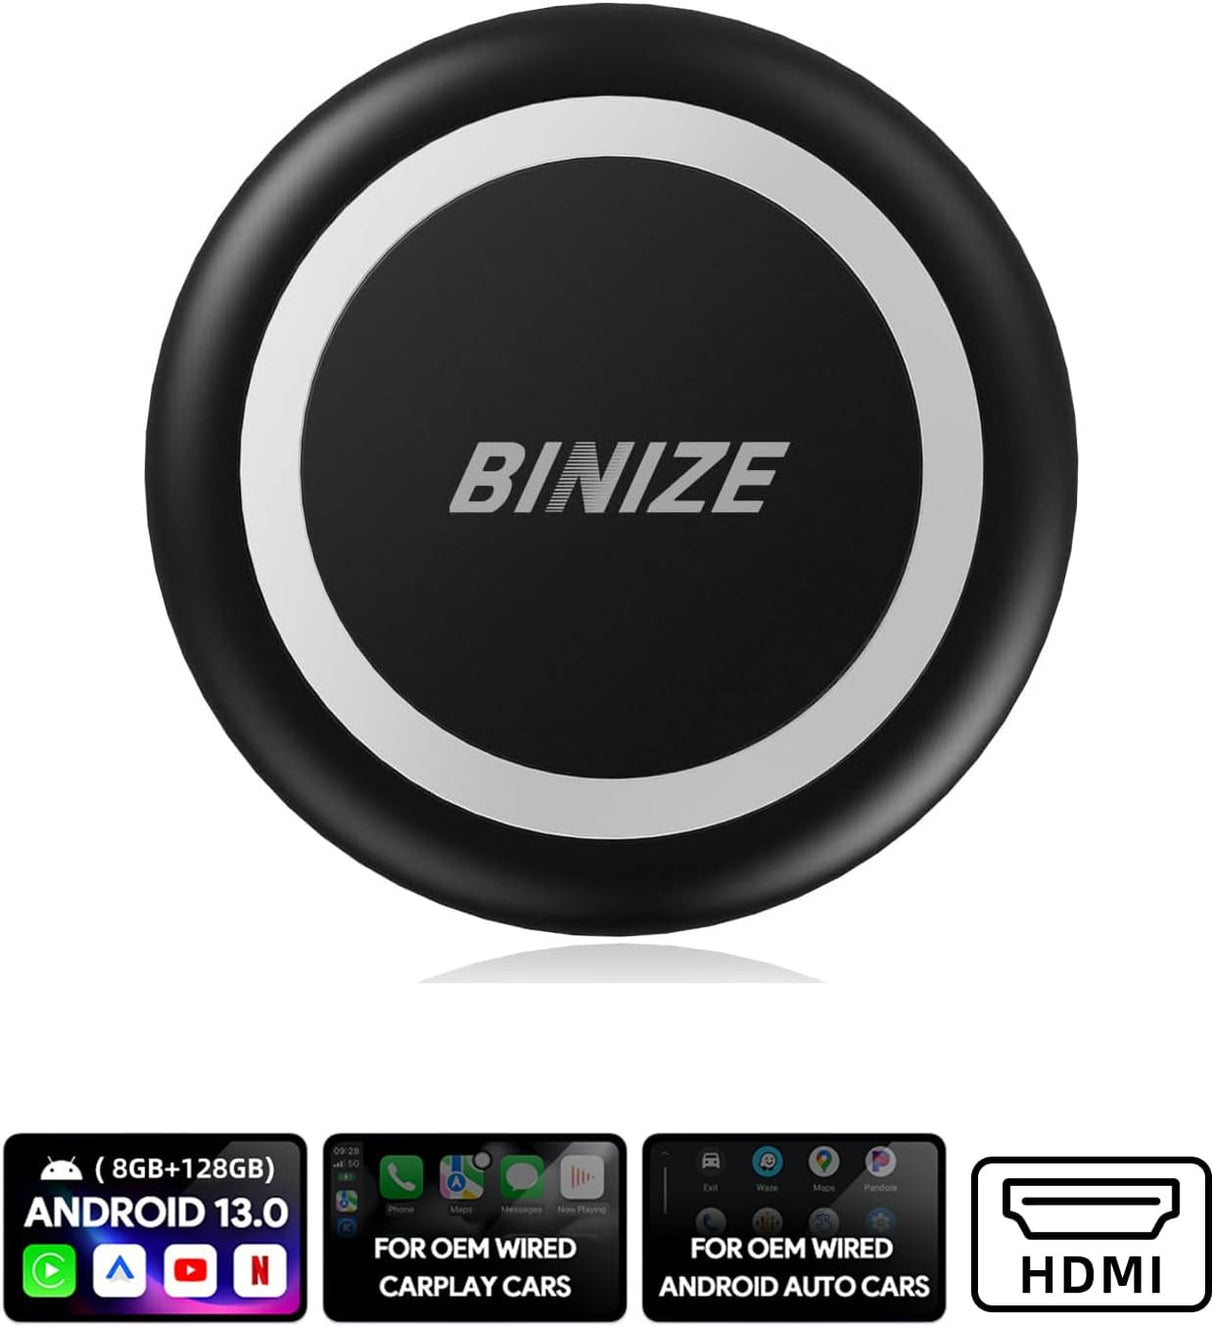 Binize Best Wireless CarPlay BOX with HDMI Support Netflix YouTube